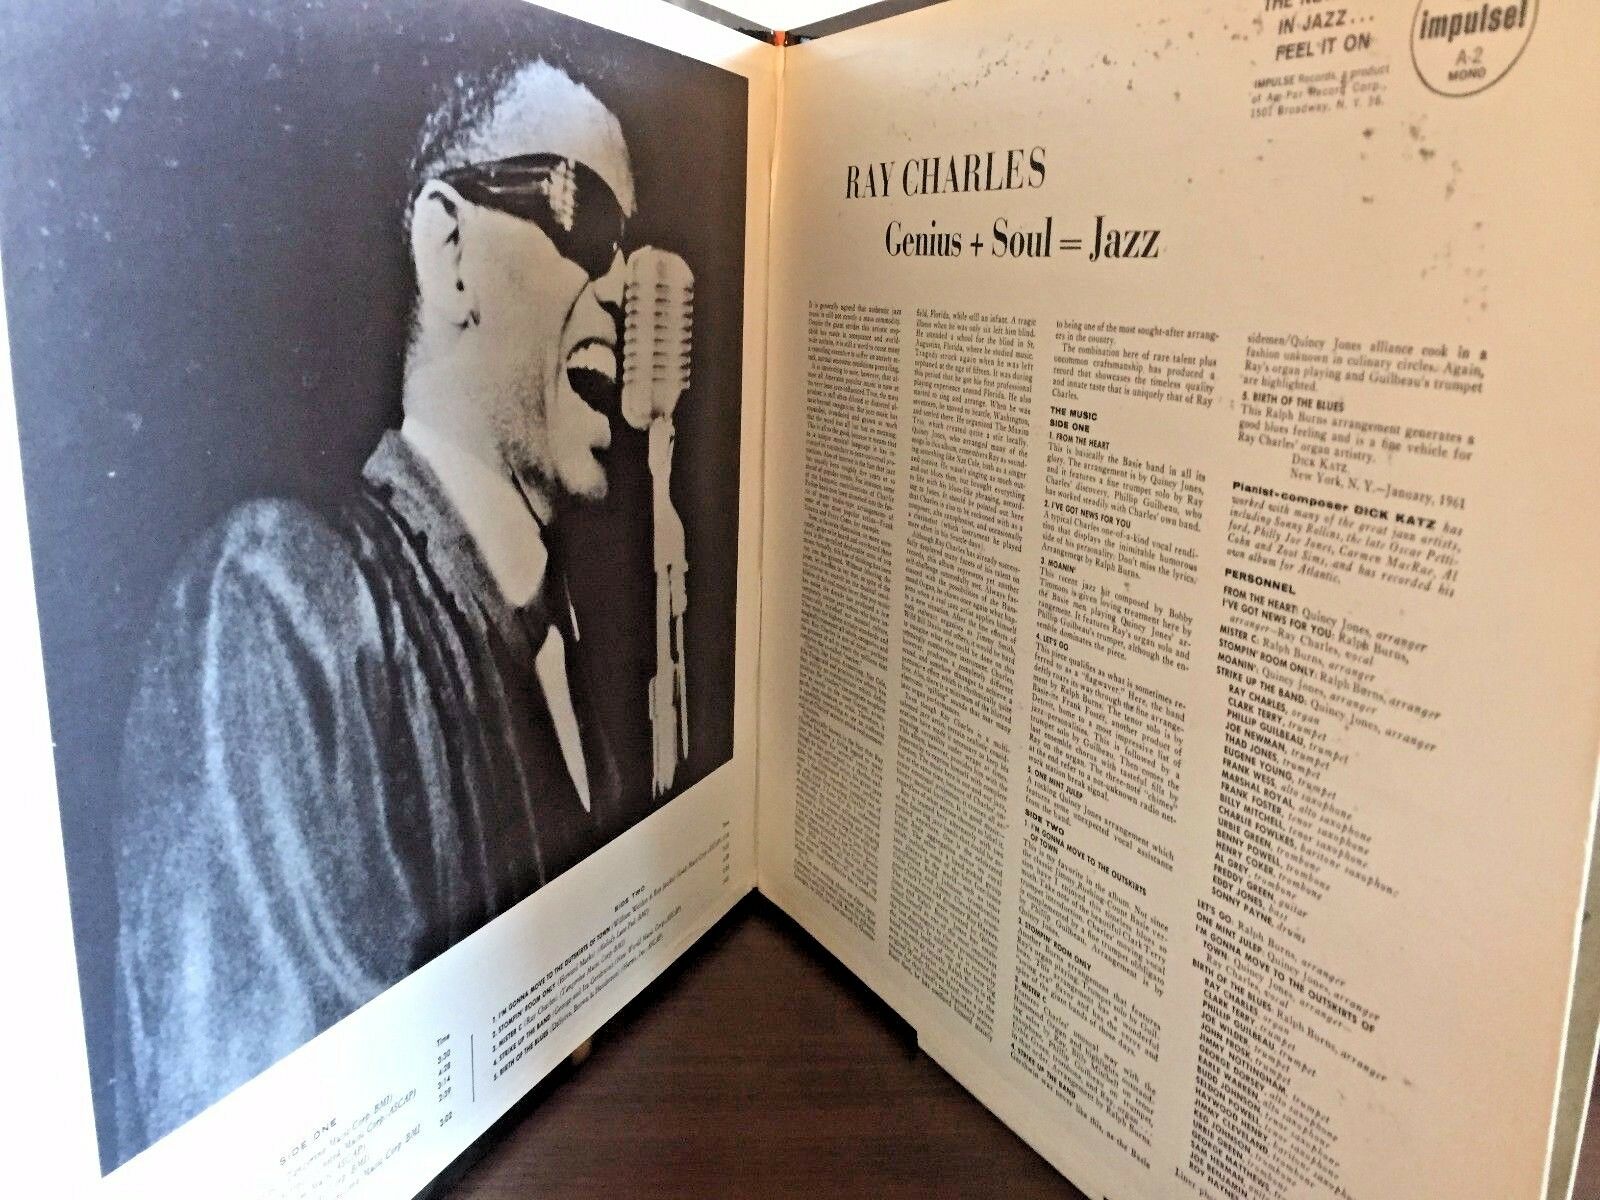 Pic 2 Genius+Soul=Jazz by Ray Charles 1961 Vinyl Impulse Records 1st Press Mono